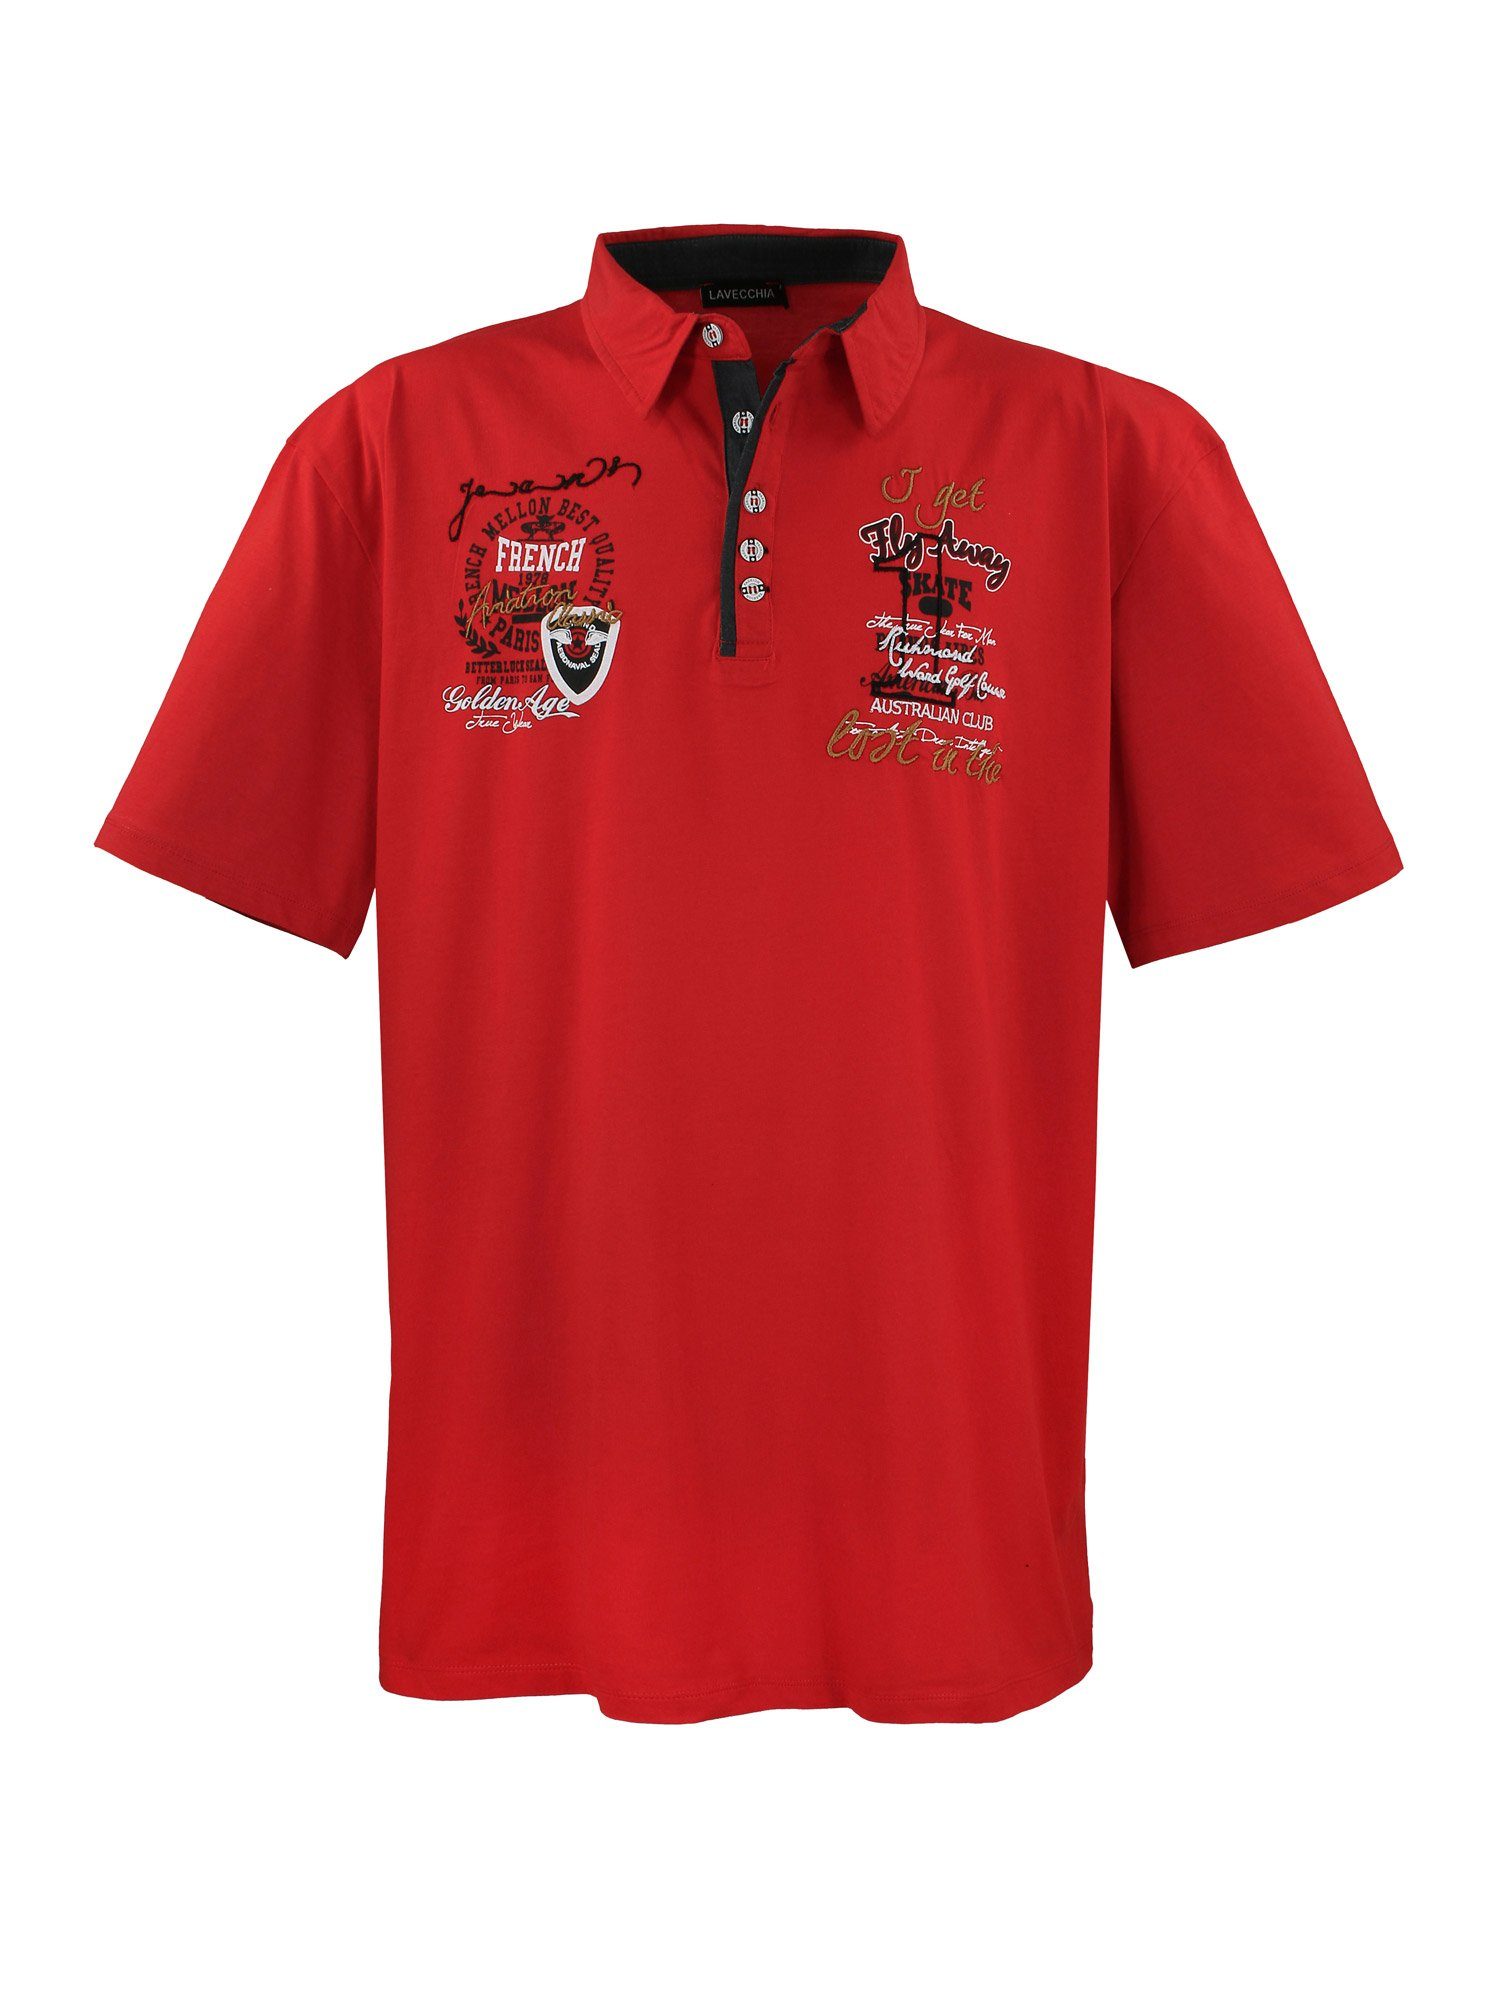 Lavecchia Poloshirt Übergrößen Herren Polo Shirt LV-3101 Herren Polo Shirt rot